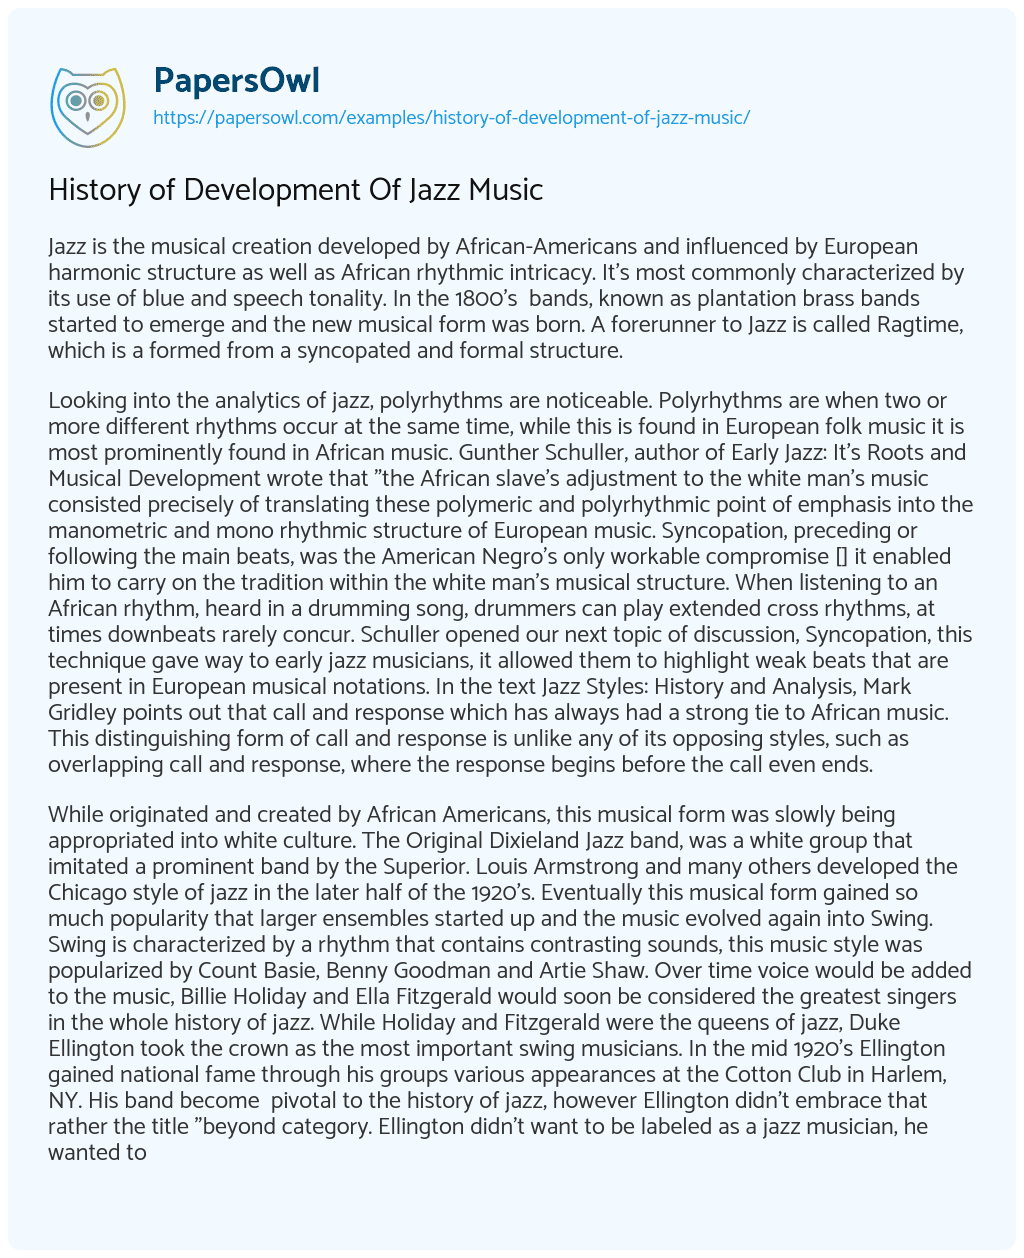 Essay on History of Development of Jazz Music